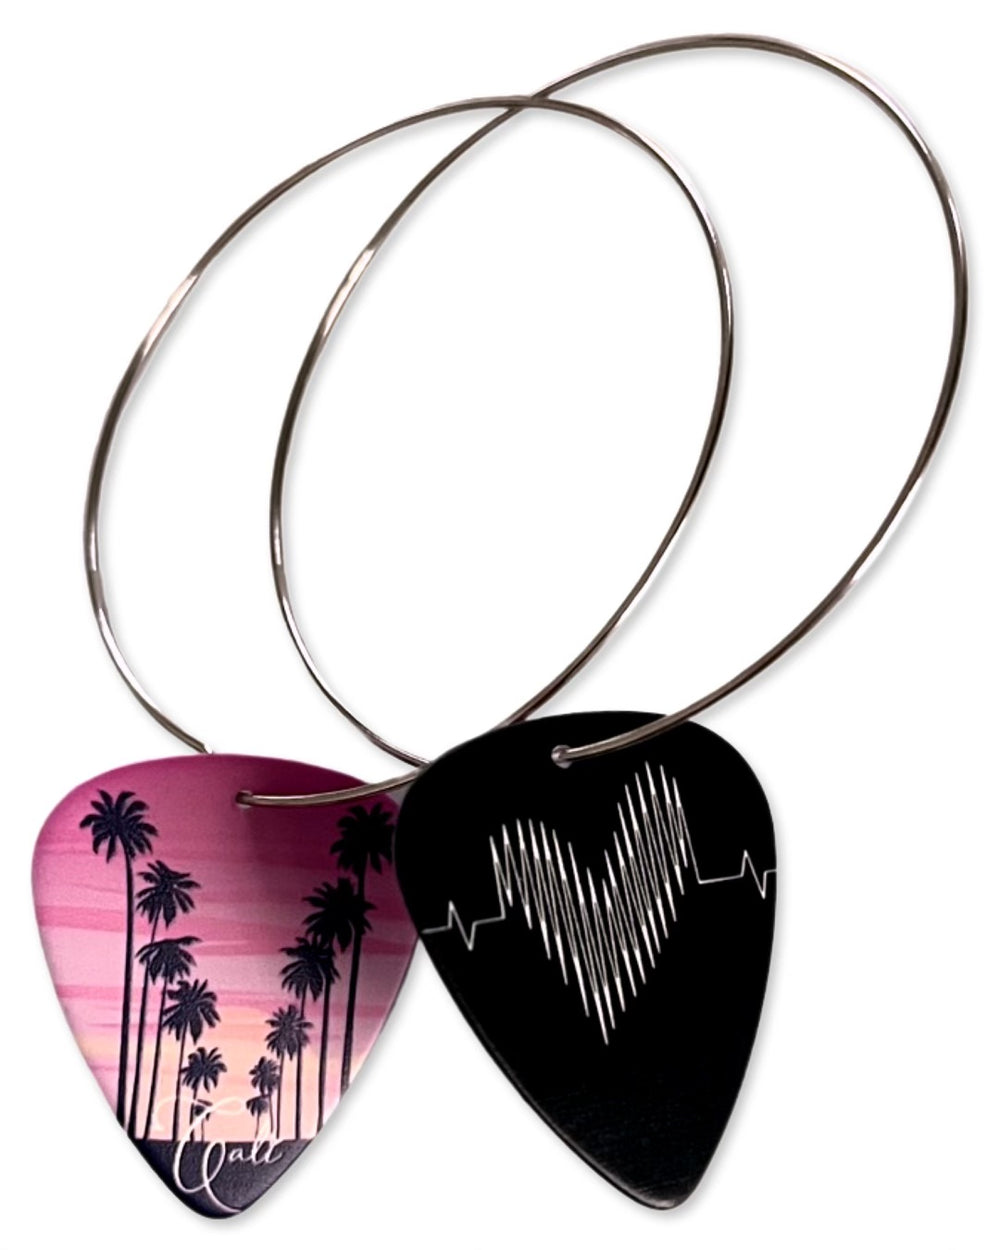 Cali Pink Palm Trees Reversible Single Guitar Pick Earrings